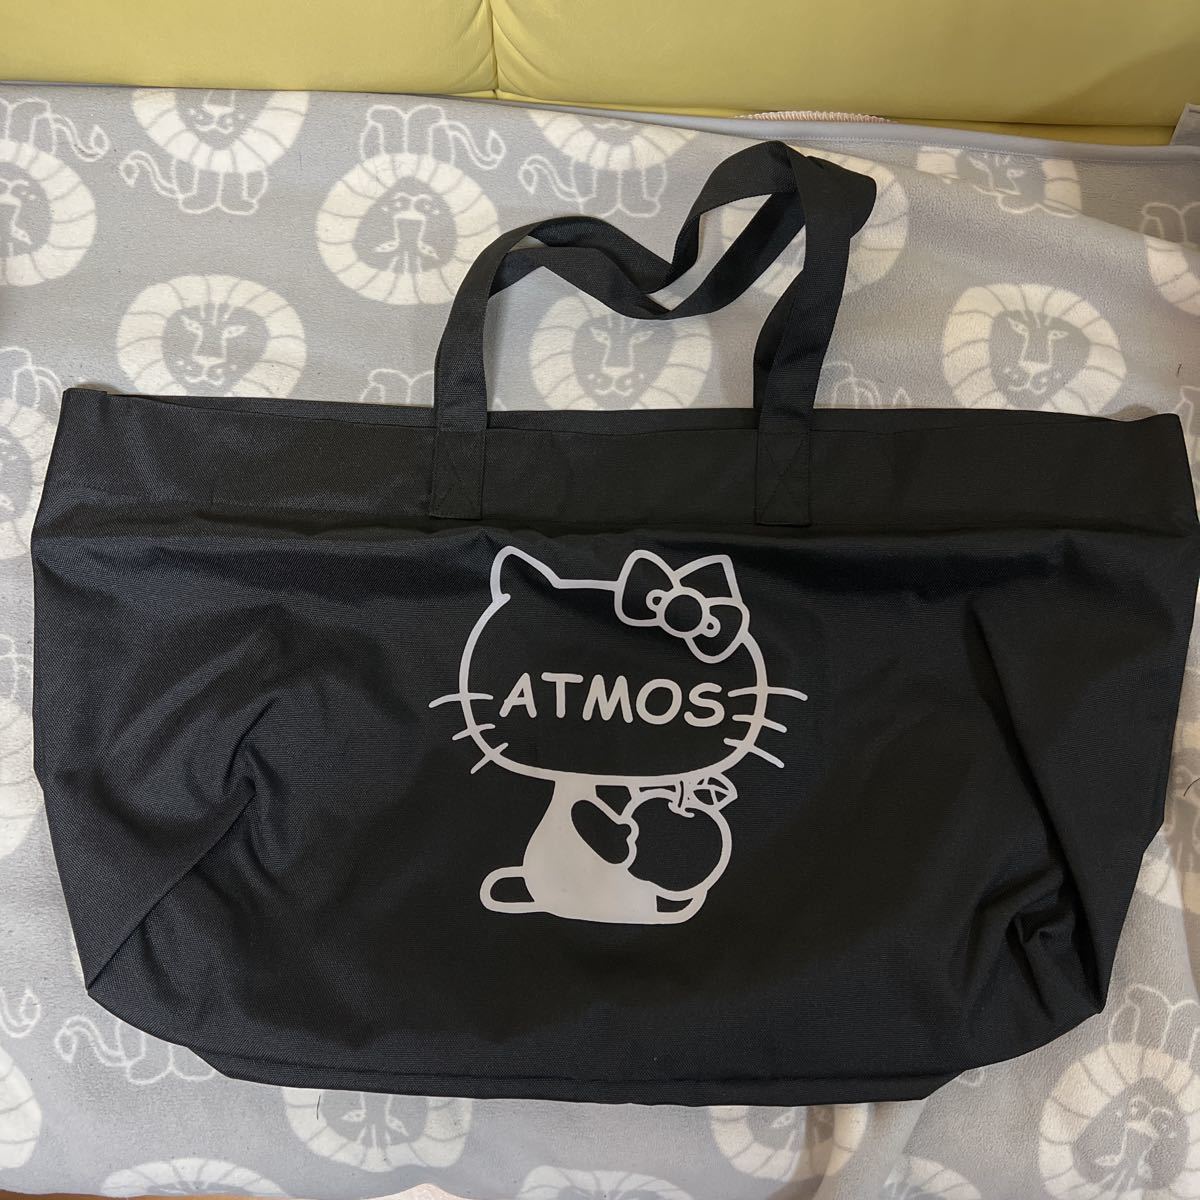 ATMOS×HALLO KITTYa Tomos Hello Kitty сотрудничество товар чёрный a Tomos покупка большая сумка 